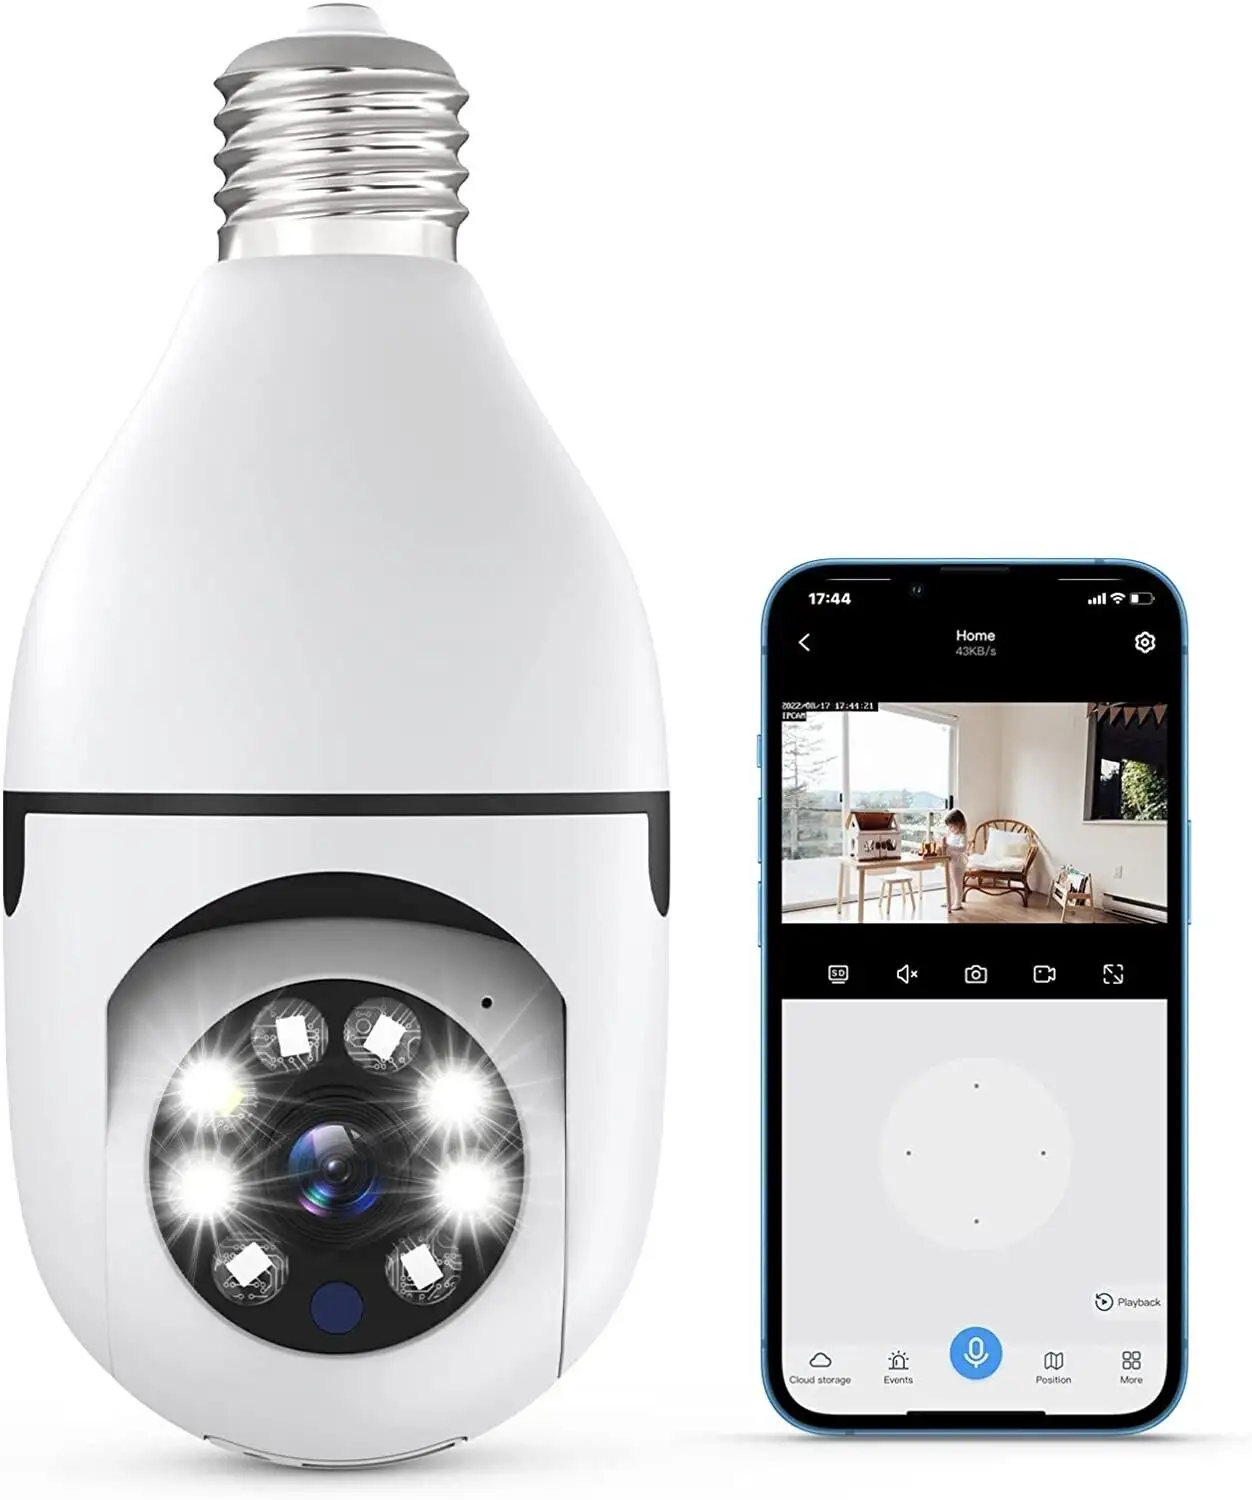 HD security mini wireless network smart home IP pan tilt 360 degree E27 socket light bulb Wifi Camera with human tracking